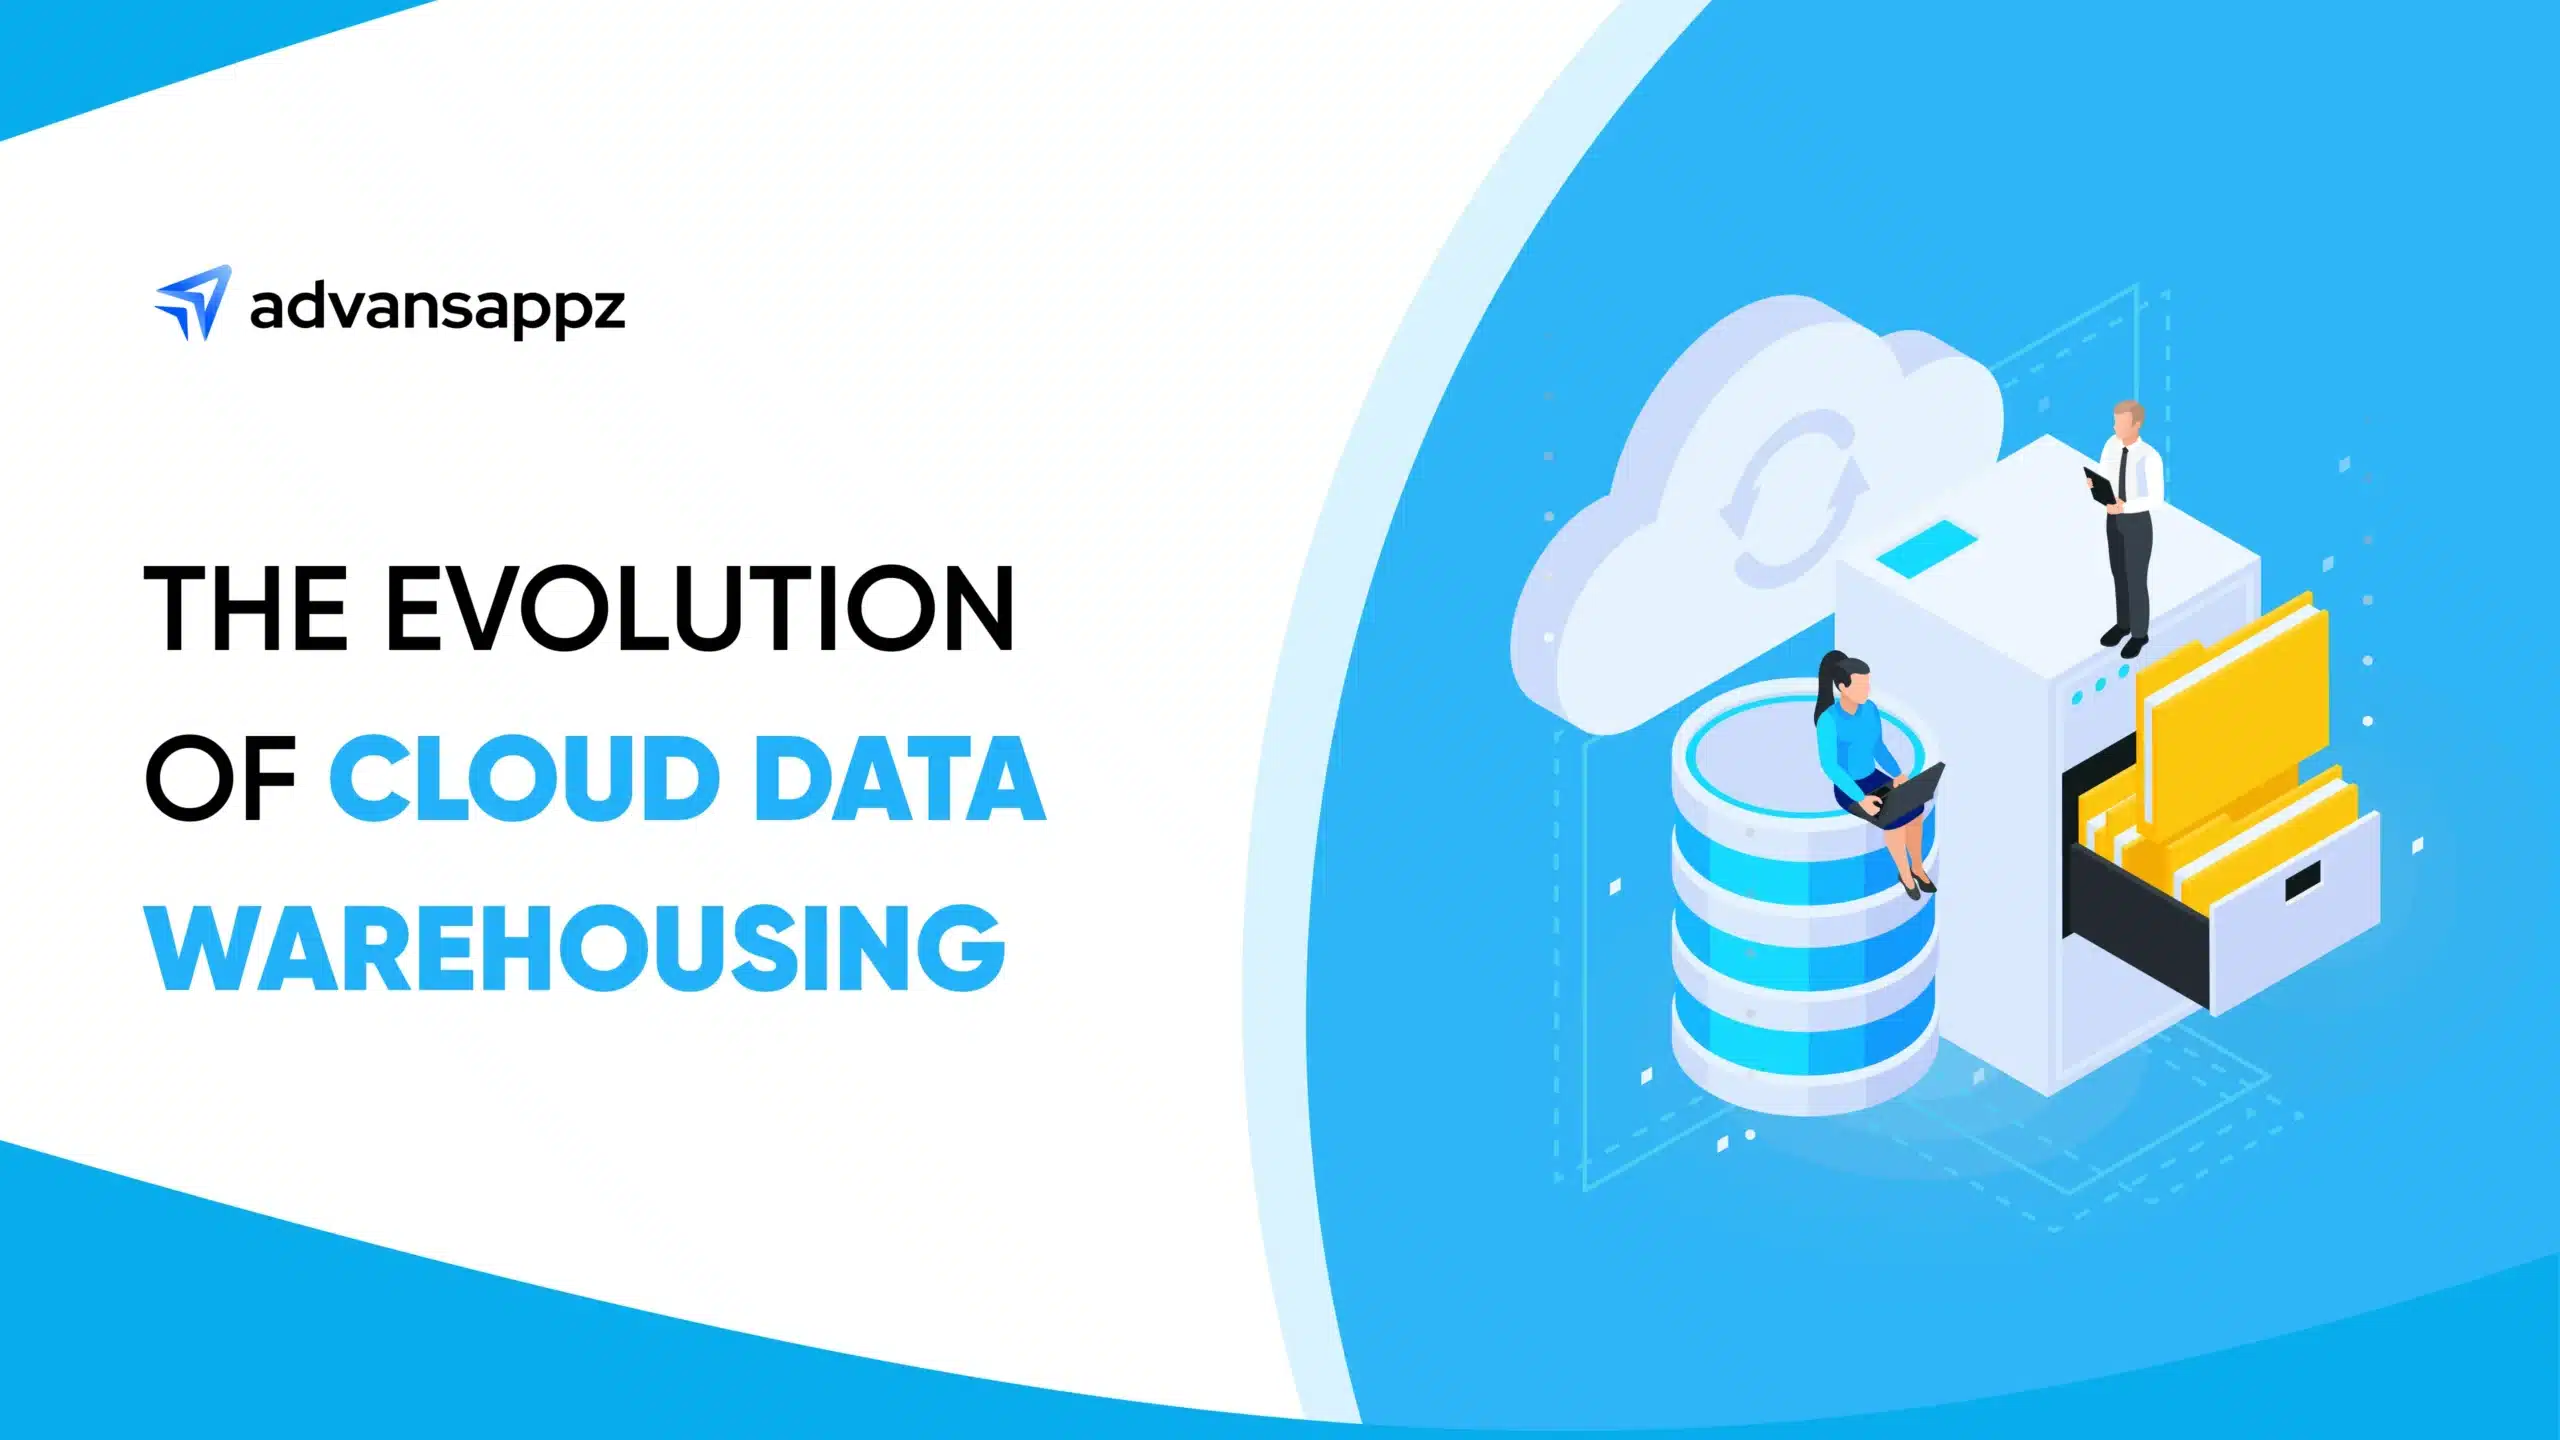 Cloud Data Warehousing